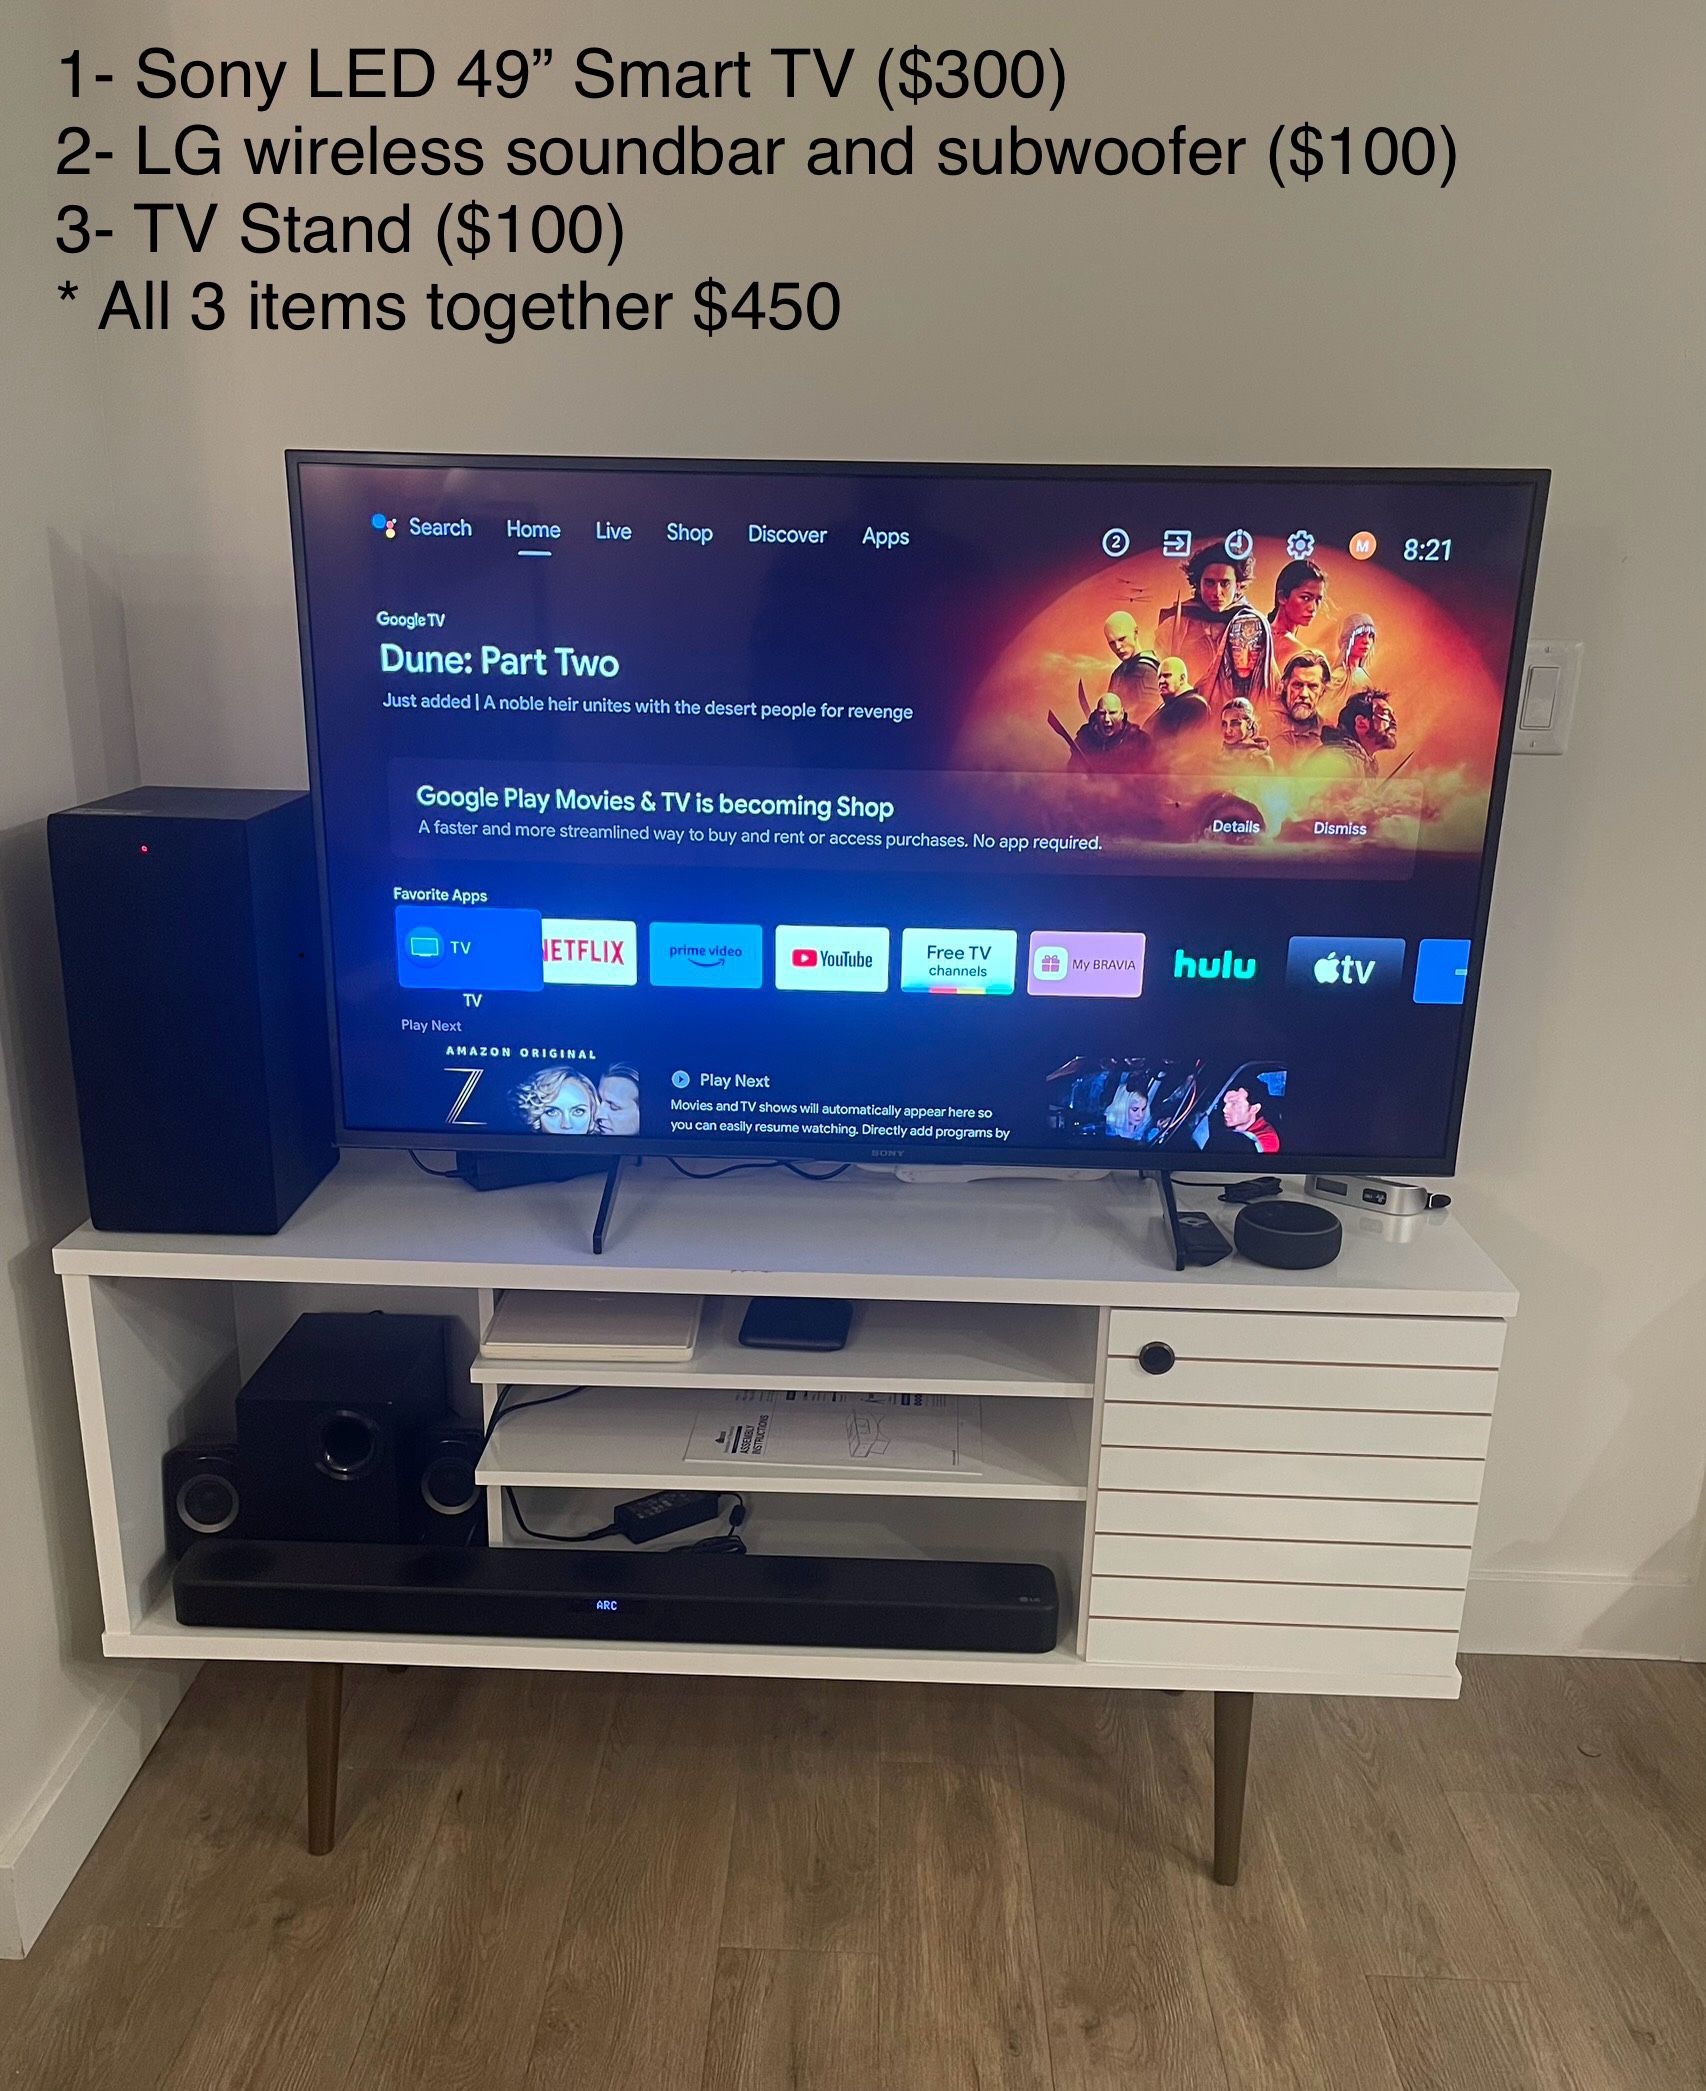 Sony 49” Smart LED TV  + TV Stand + LG Sundbar